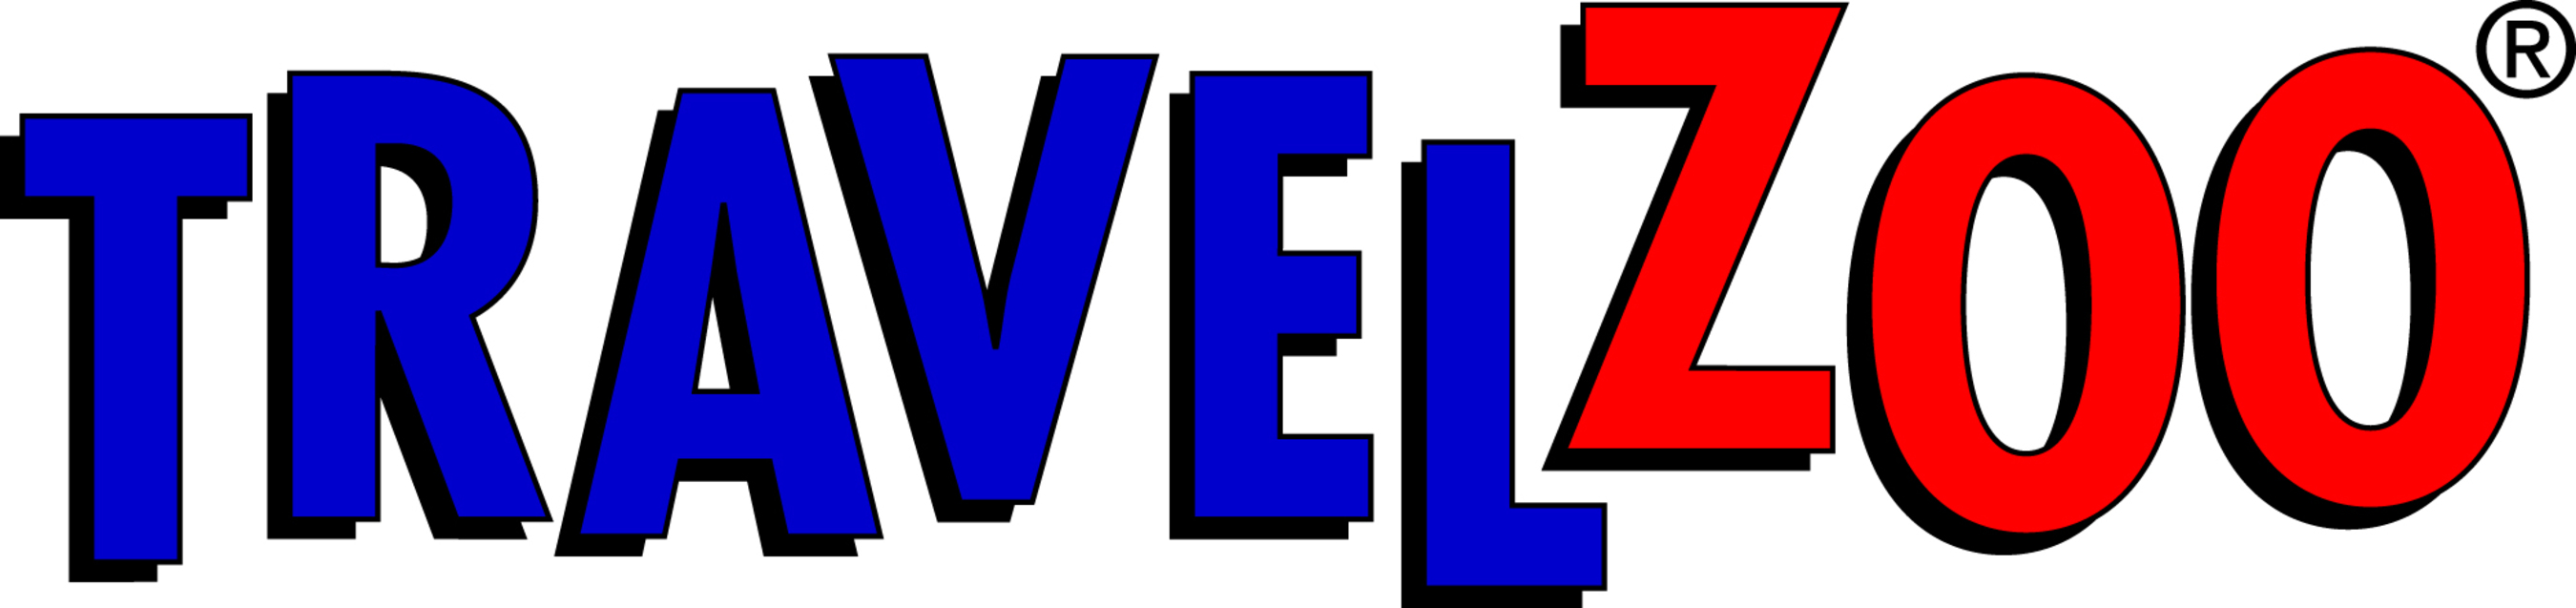 Travelzoo Logo (PRNewsFoto/Travelzoo) (PRNewsFoto/Travelzoo)